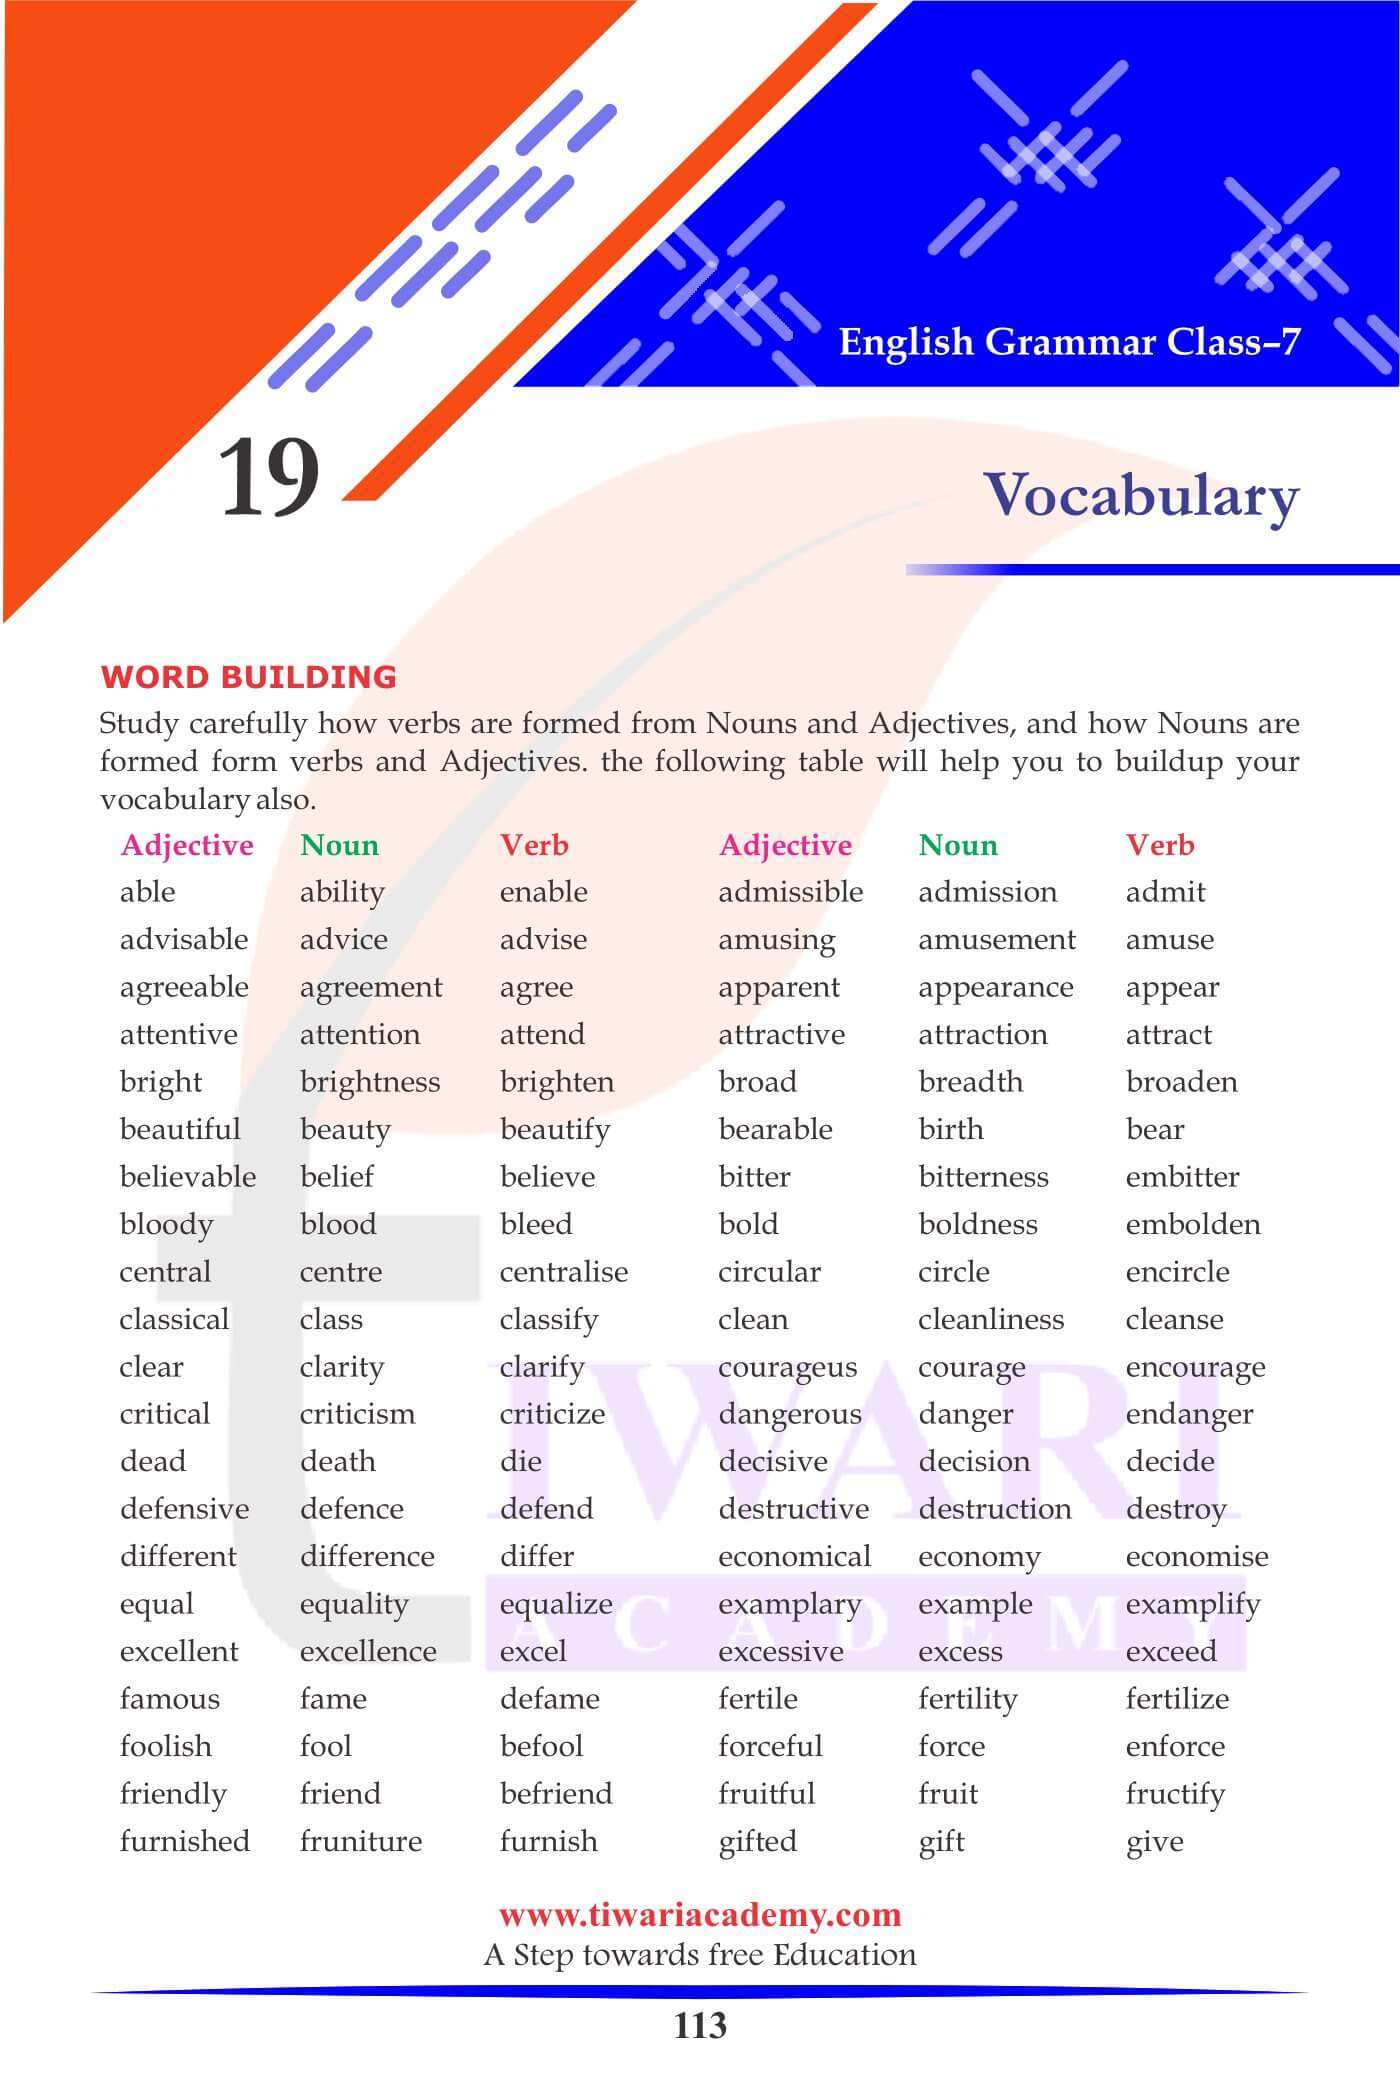 Class 7 English Grammar Vocabulary